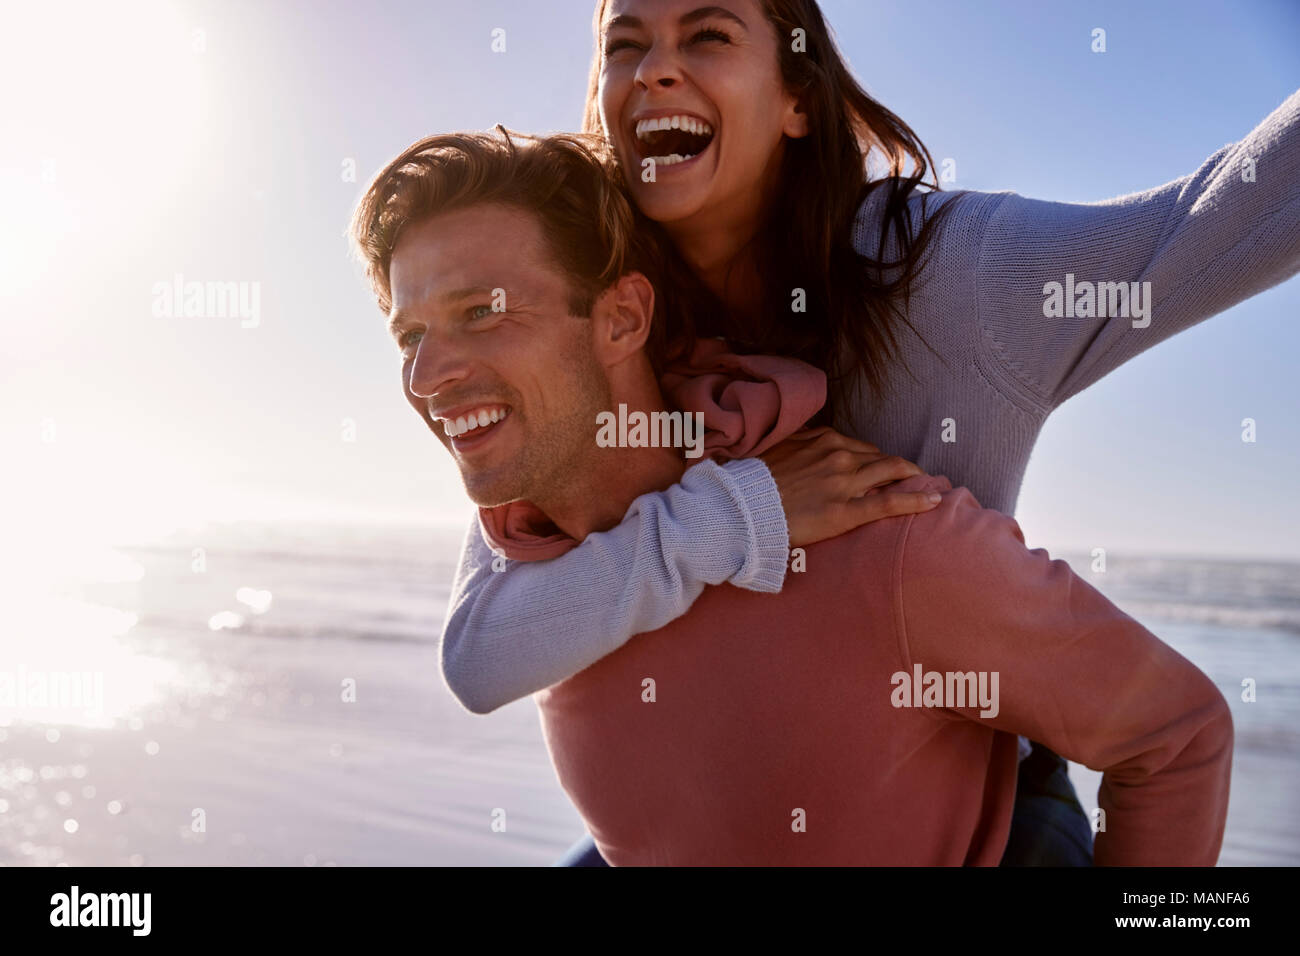 Man Giving Woman Piggyback On Winter Beach Vacation Stock Photo